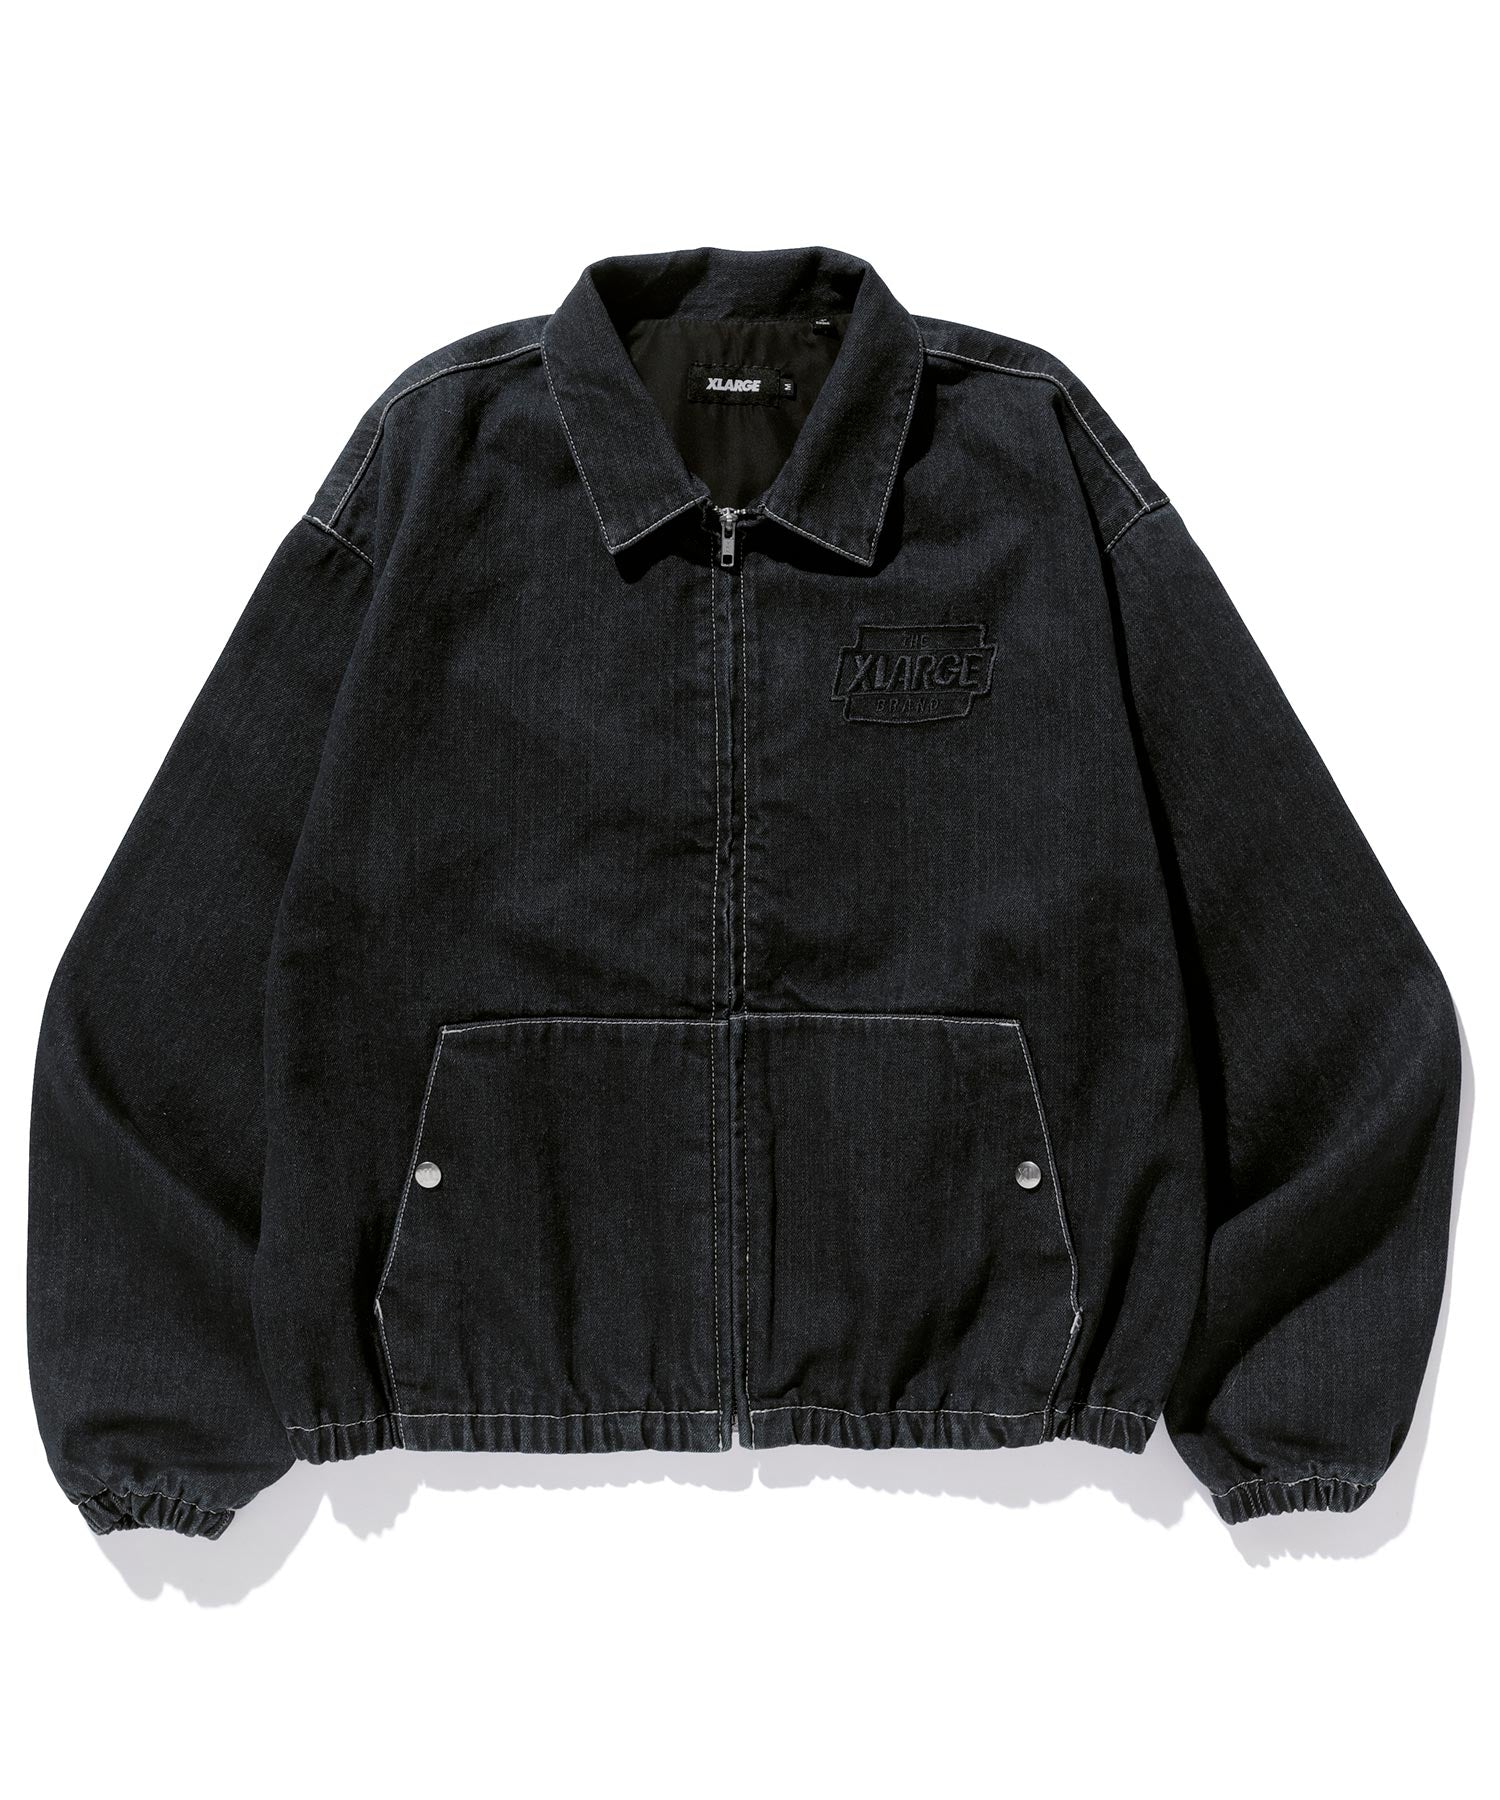 Quealent Foundry Big and Tall Jacket Retro Casual Lapel Long Sleeve Tooling  Jacket Thickening Warm Denim Multi Pockets Denim Men Coat Black XL